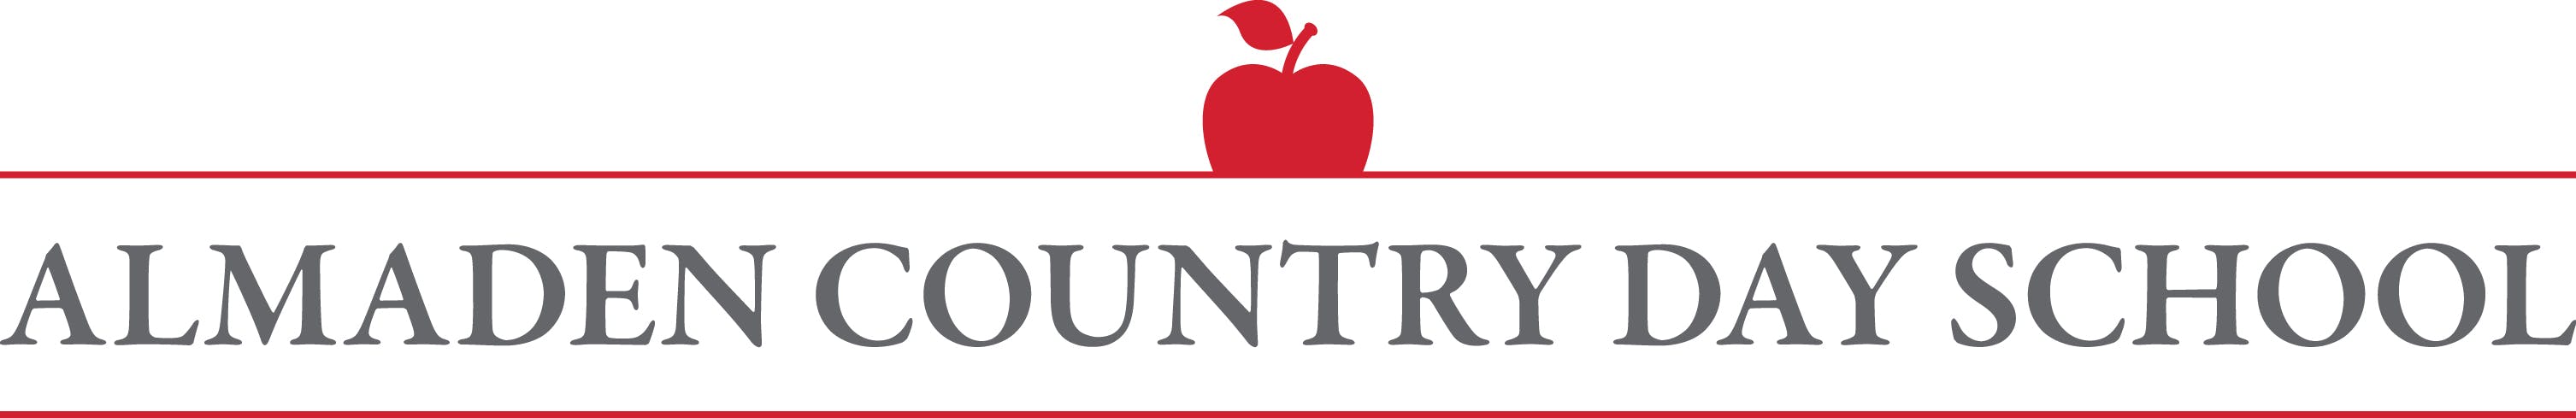 Almaden Country Day School logo